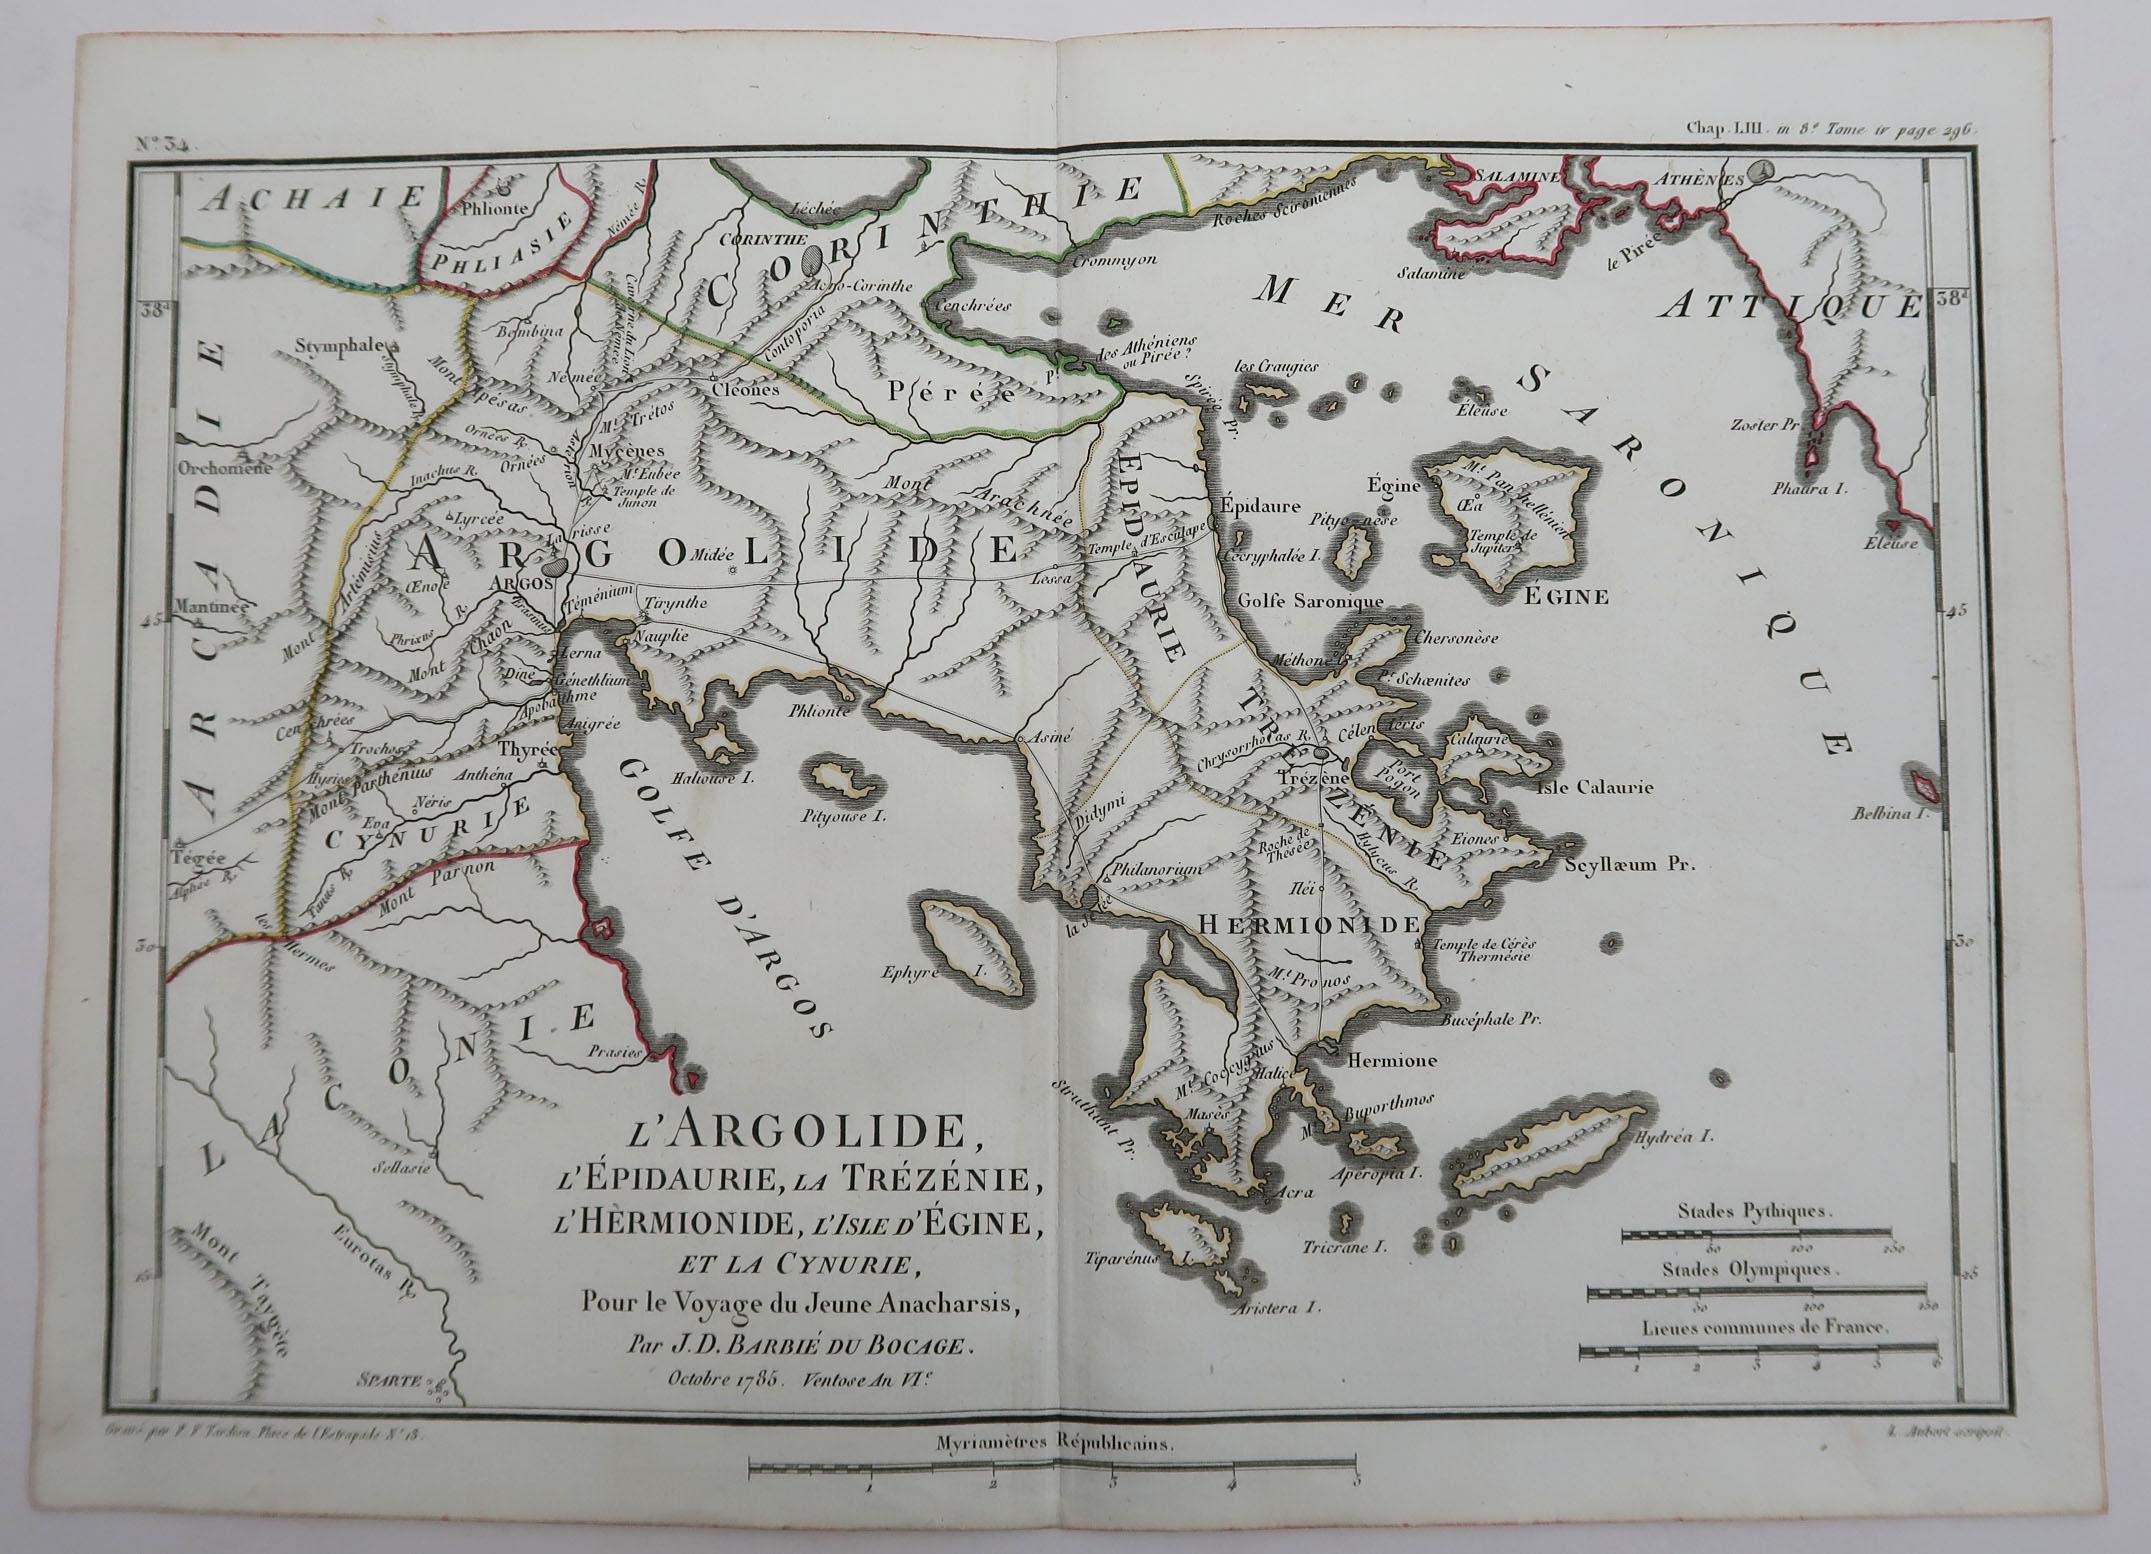 Other Original Antique Map of Ancient Greece, Argolis, Island of Hydra, 1785